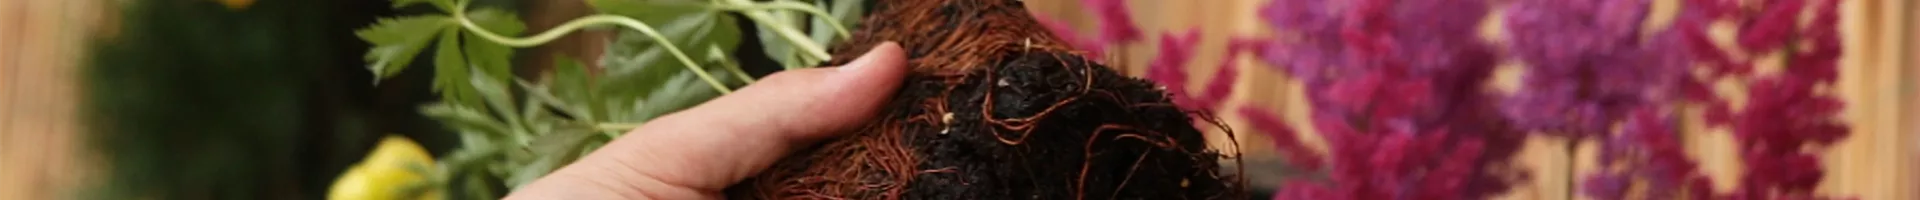 Trollblume - Einpflanzen ins Beet (Thumbnail)0.jpg